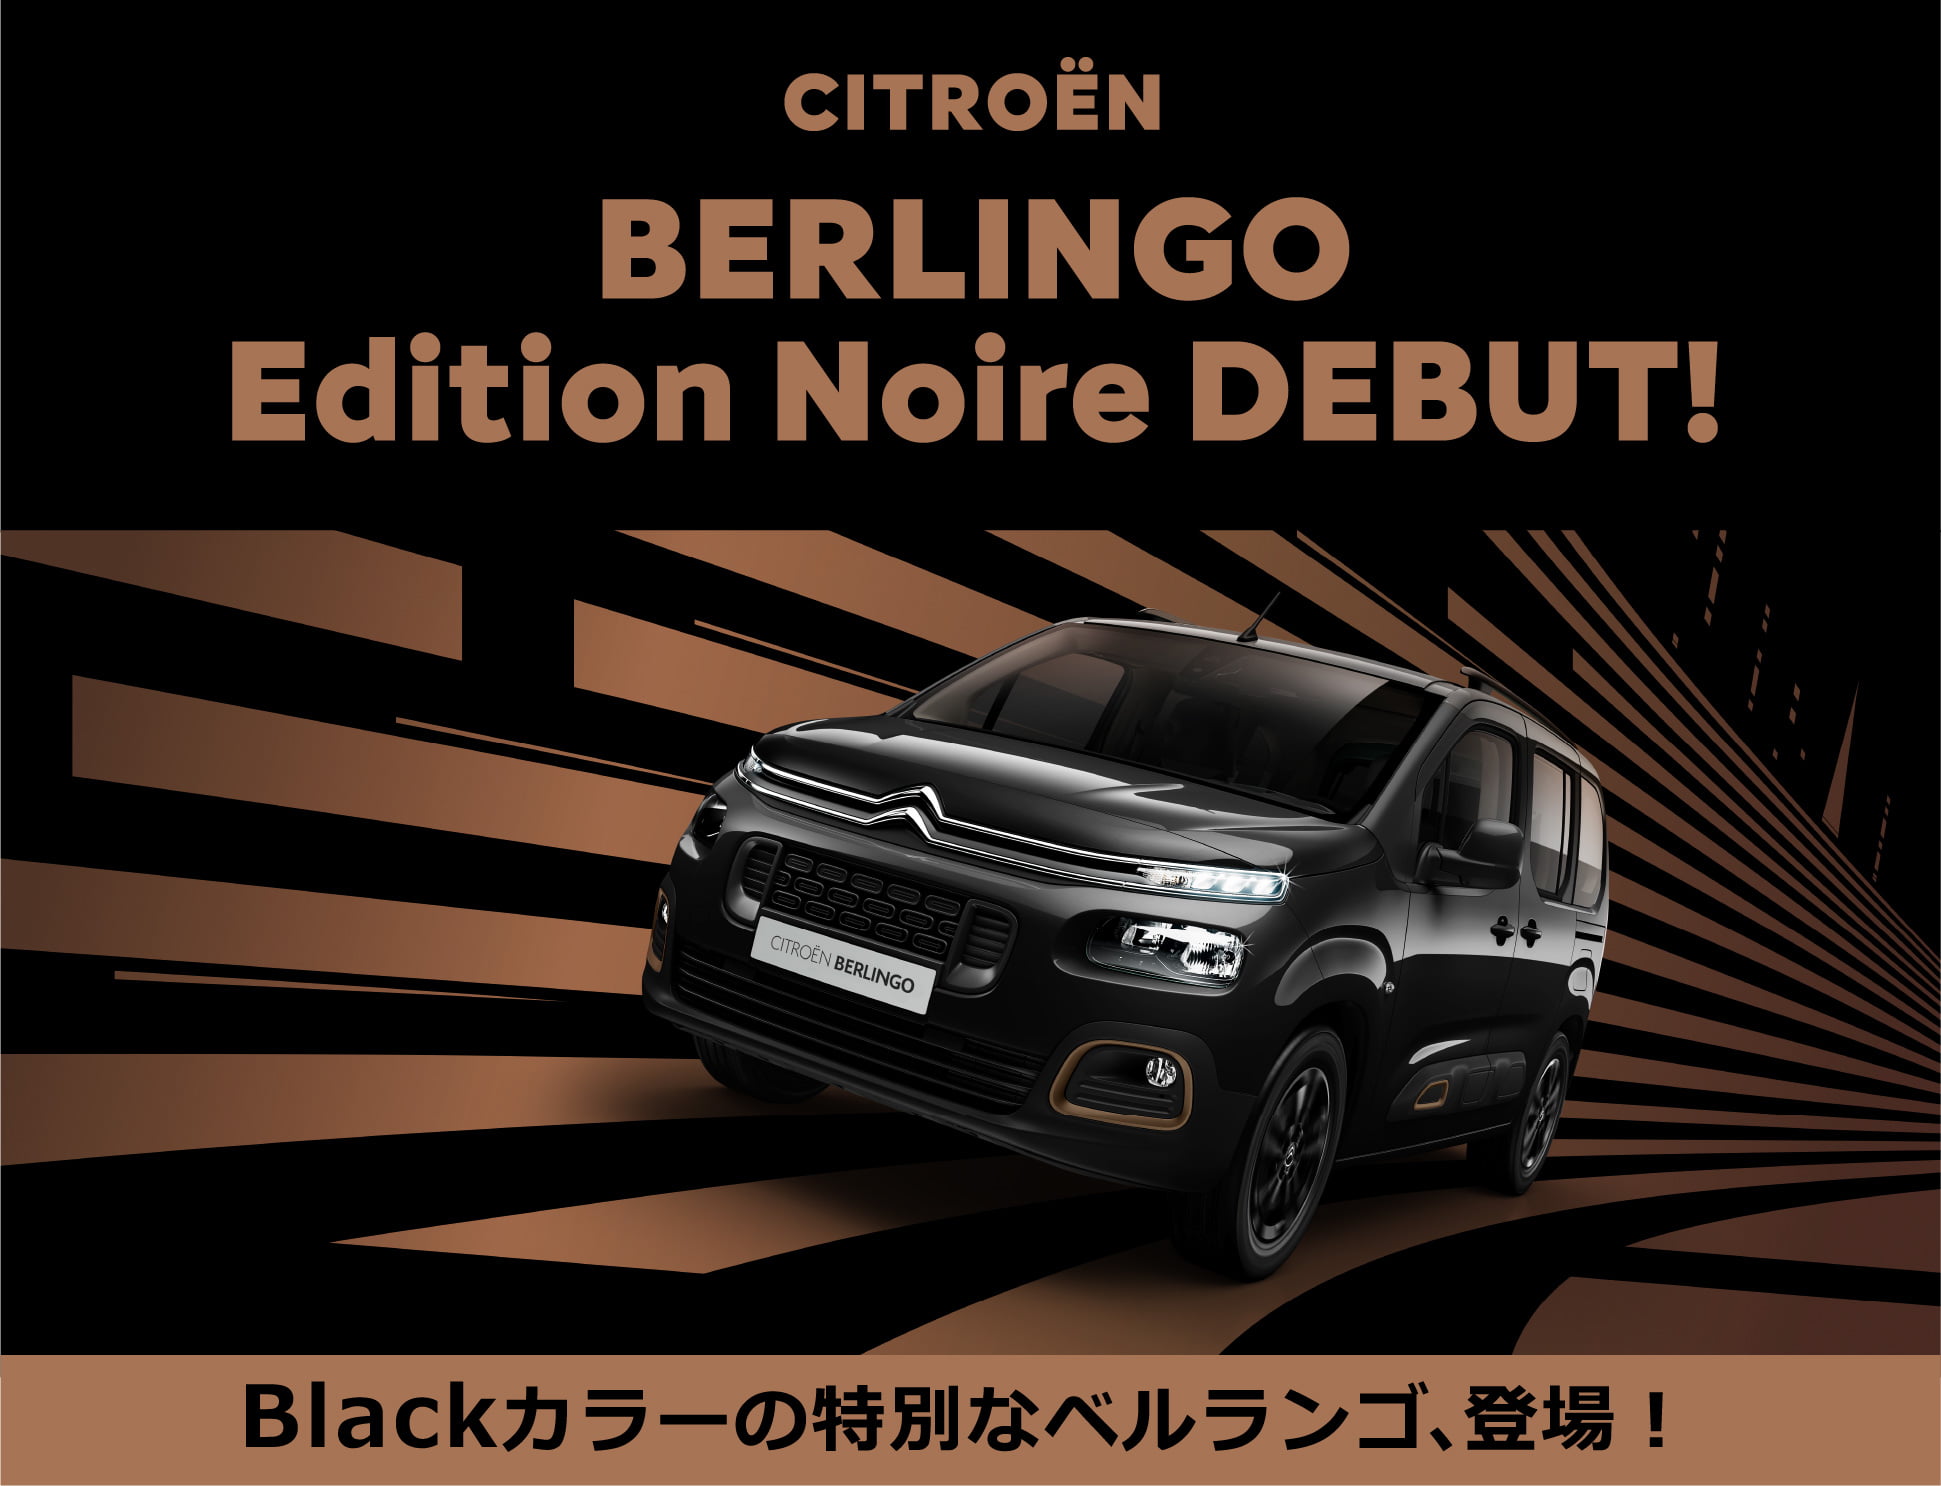 BERLINGO Edition Noire DEBUT!